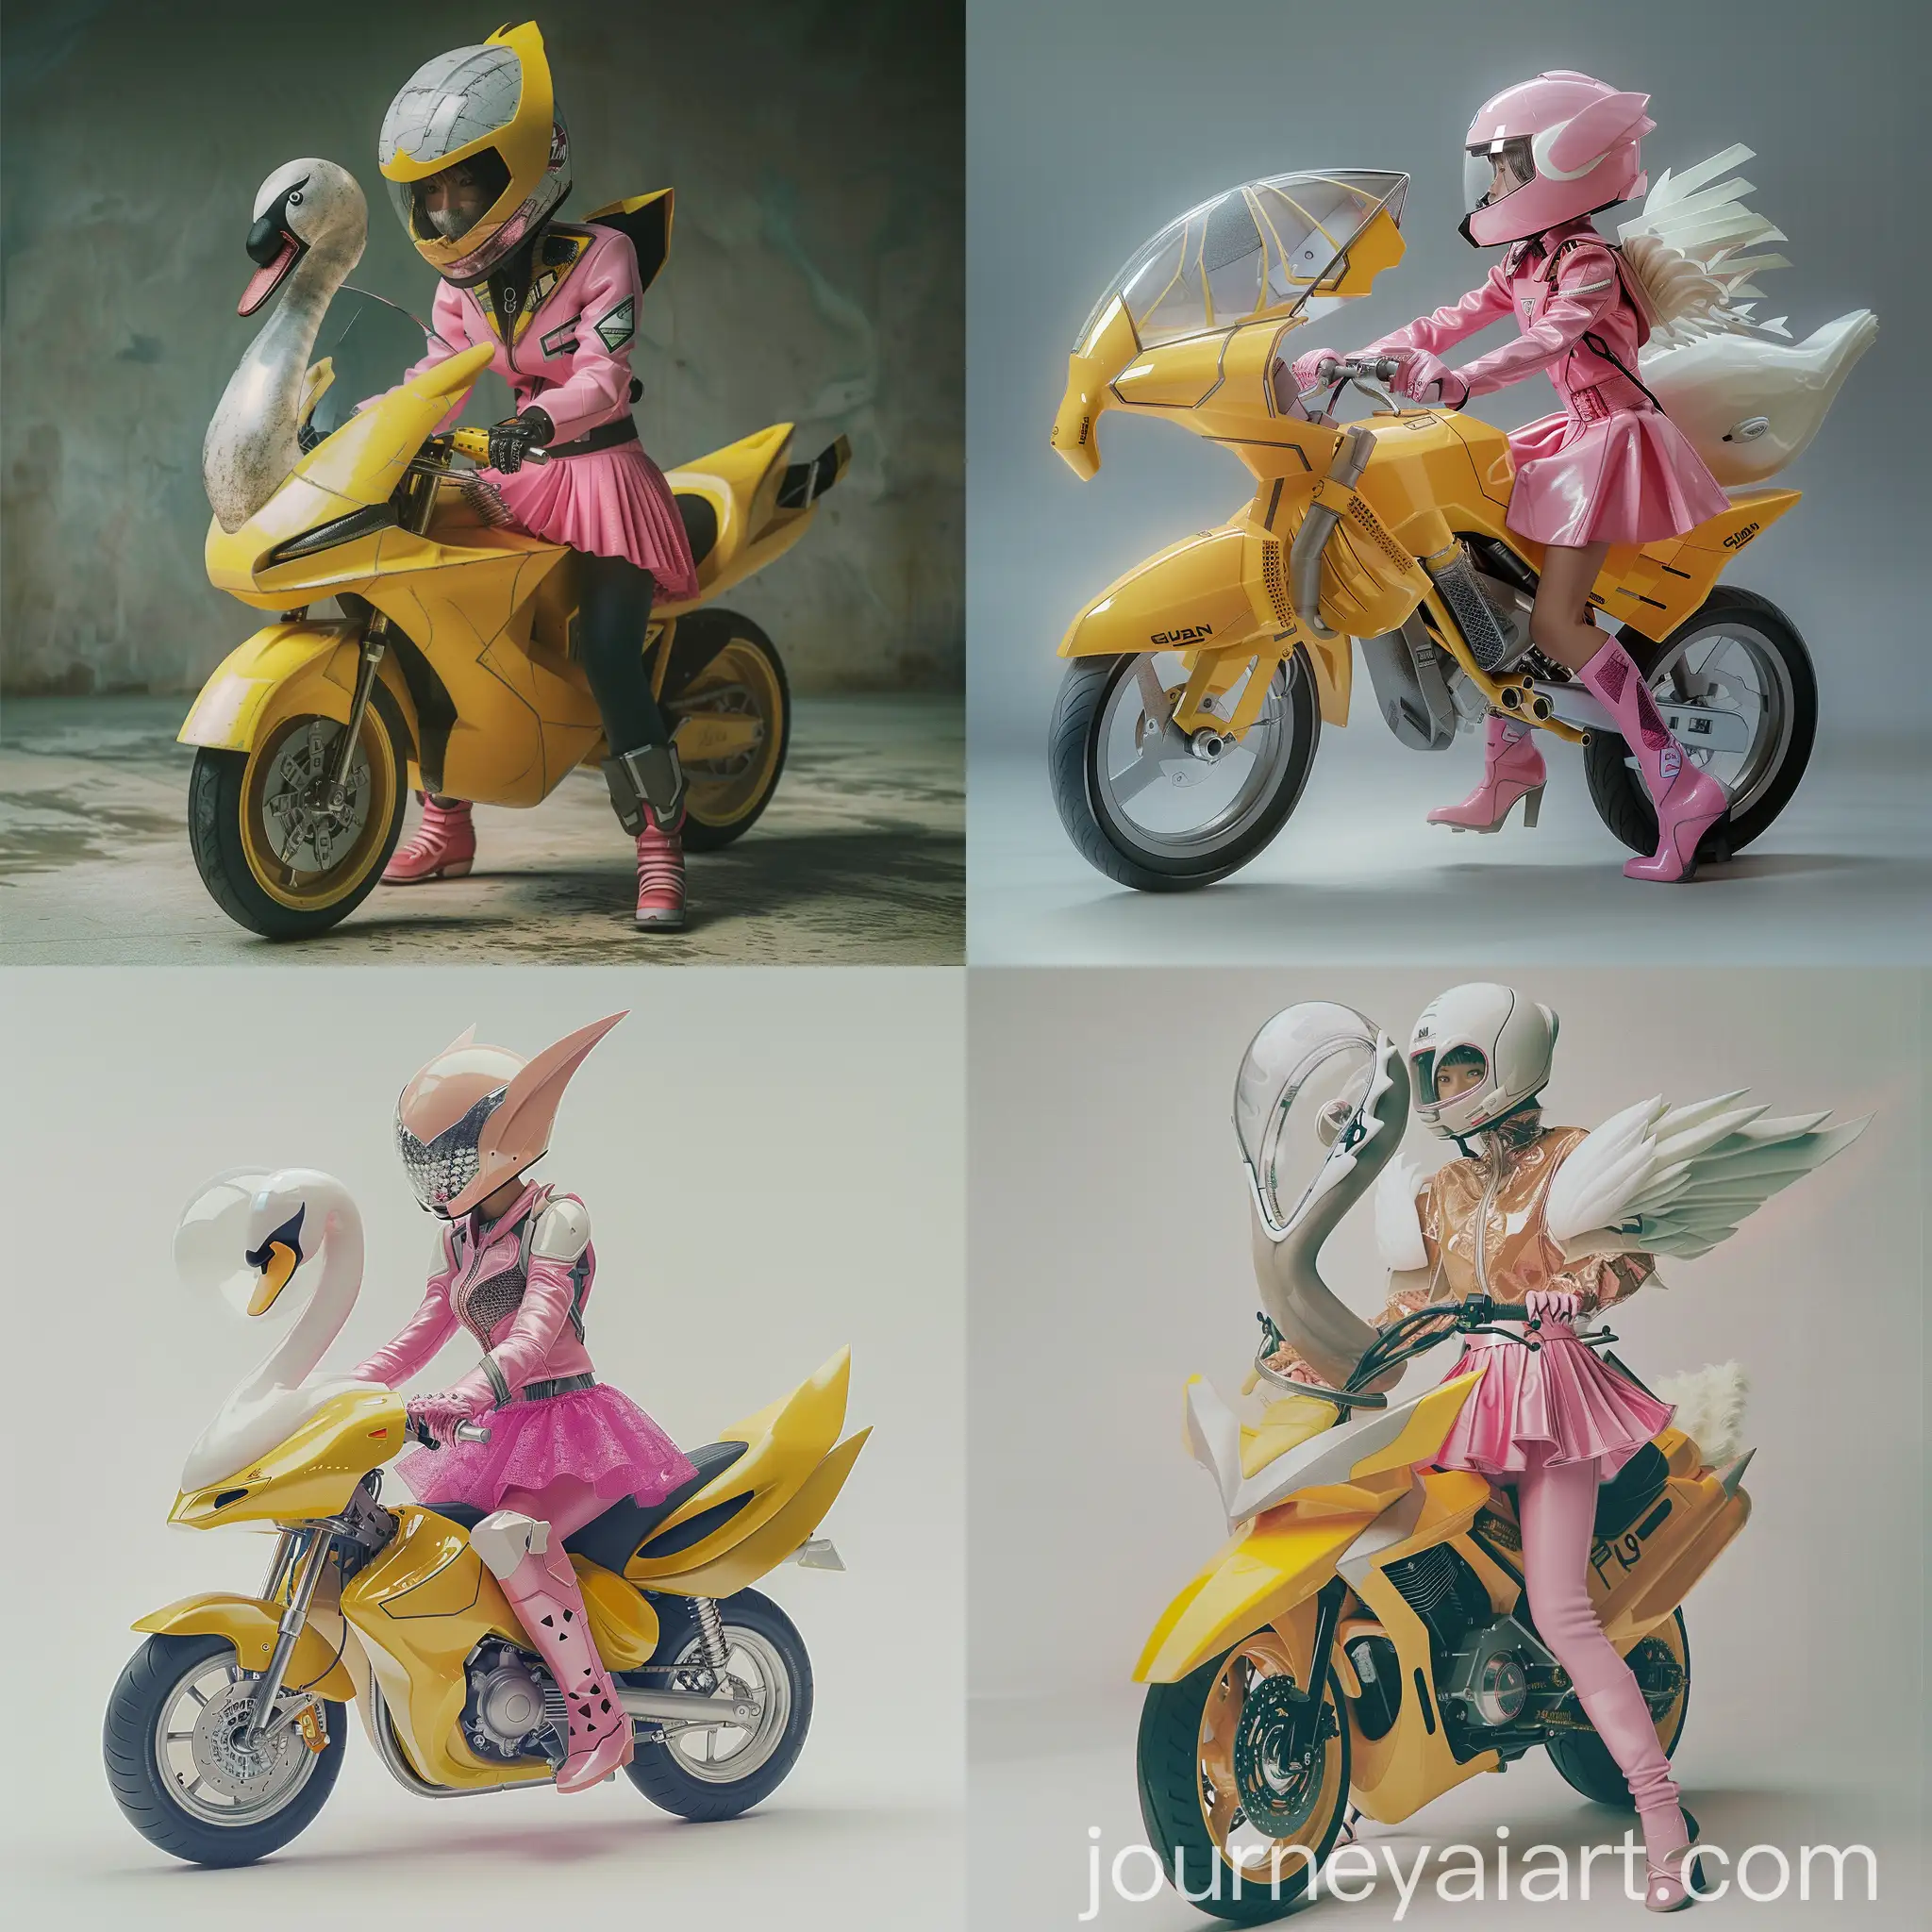 AmericanJapanese-MixedRace-Girl-Jun-Riding-Yellow-Super-Rocket-Motorcycle